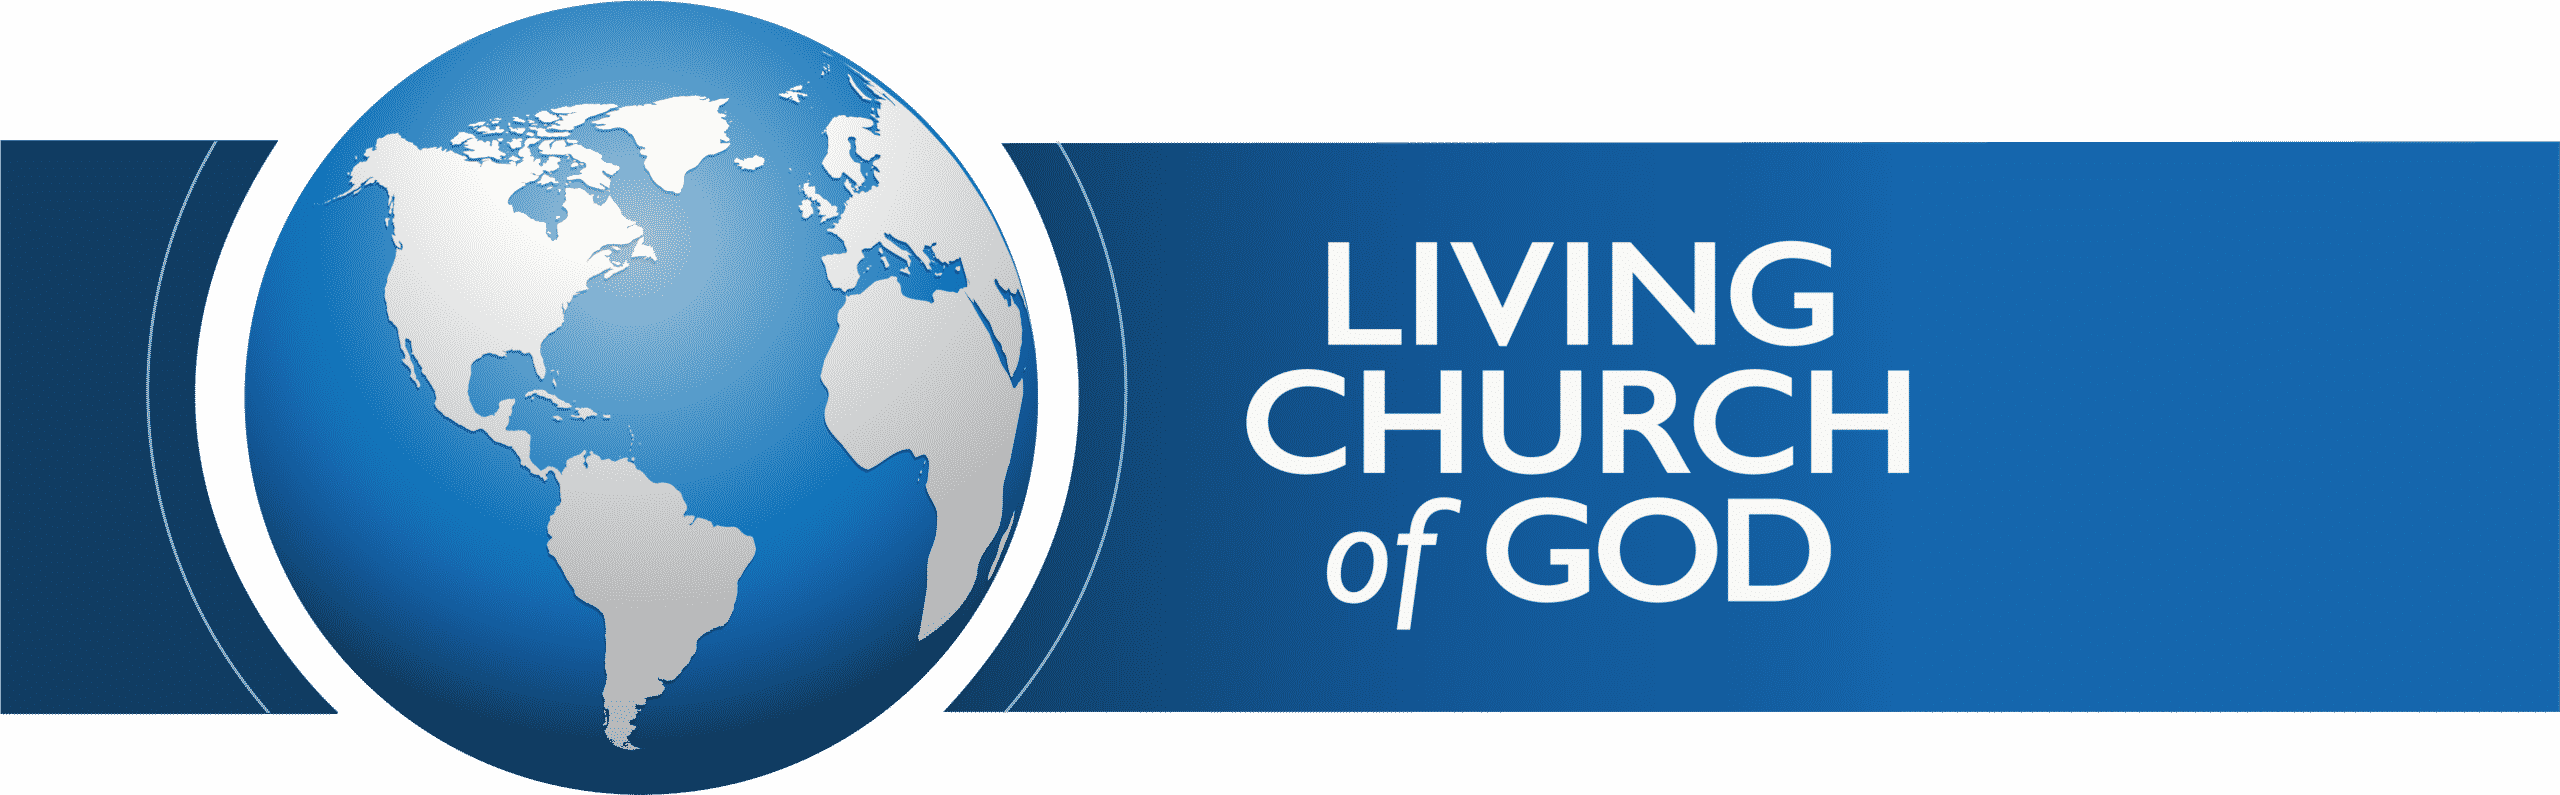 Living Church of God